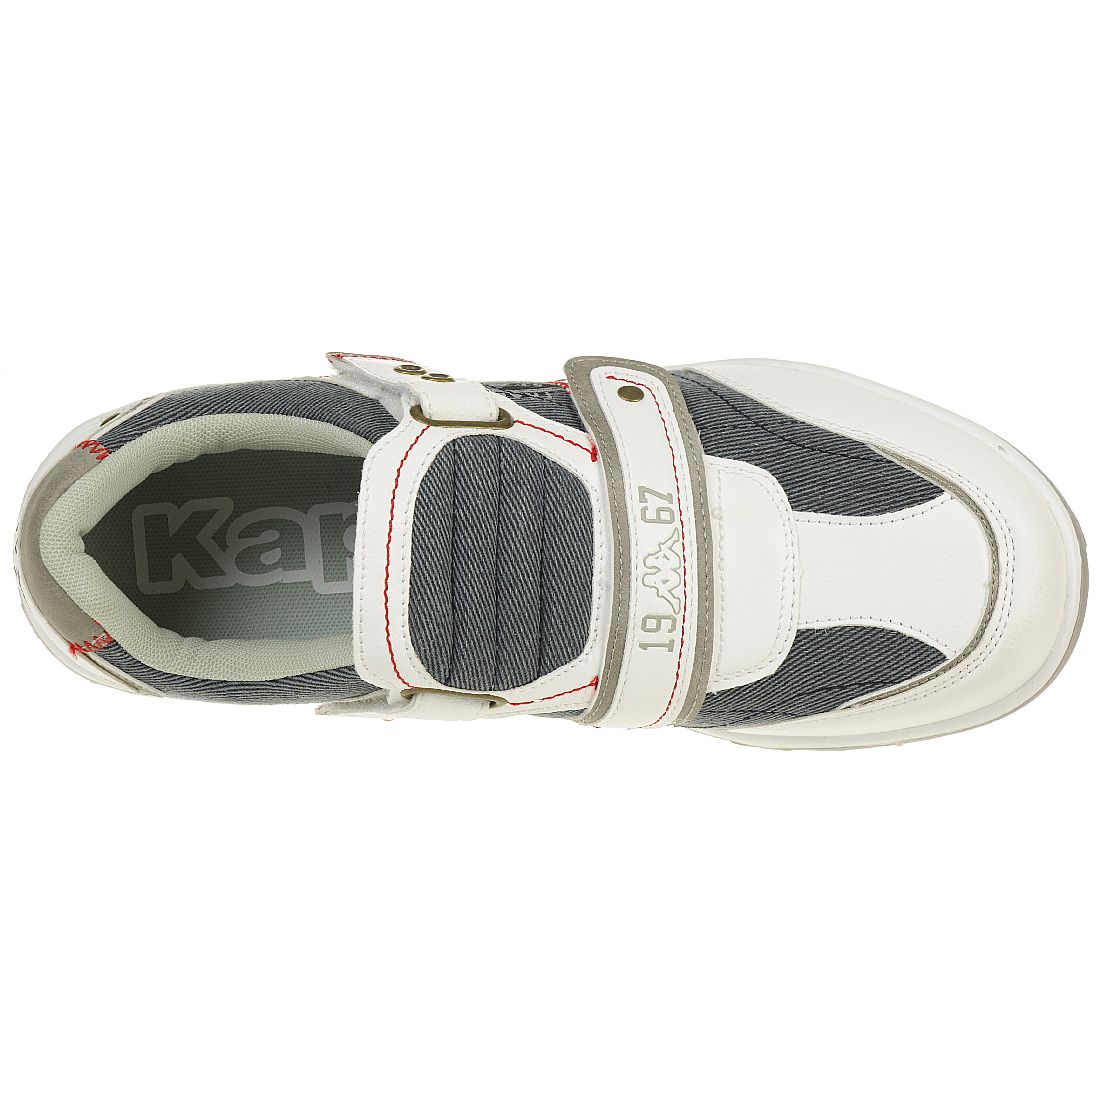 Kappa SASBY Herren Casual Sneaker Schuhe Klett weiss/blau 242653